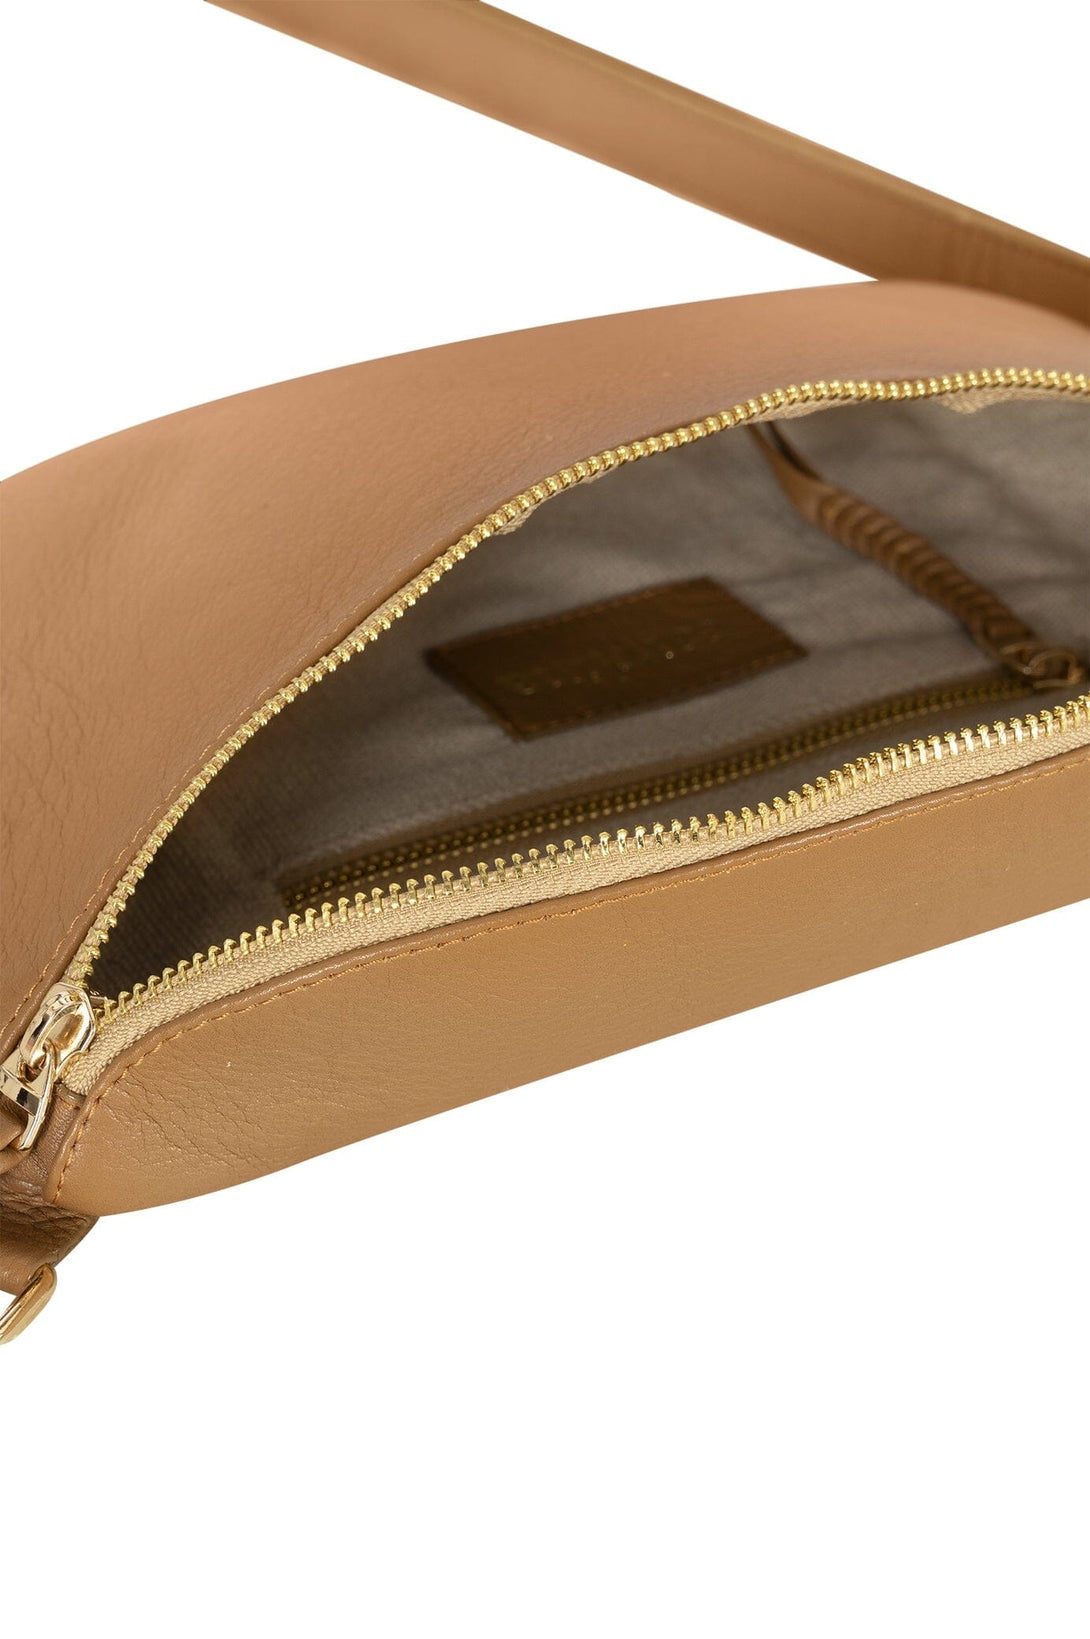 Ramona Leather Handbag Tan Leather